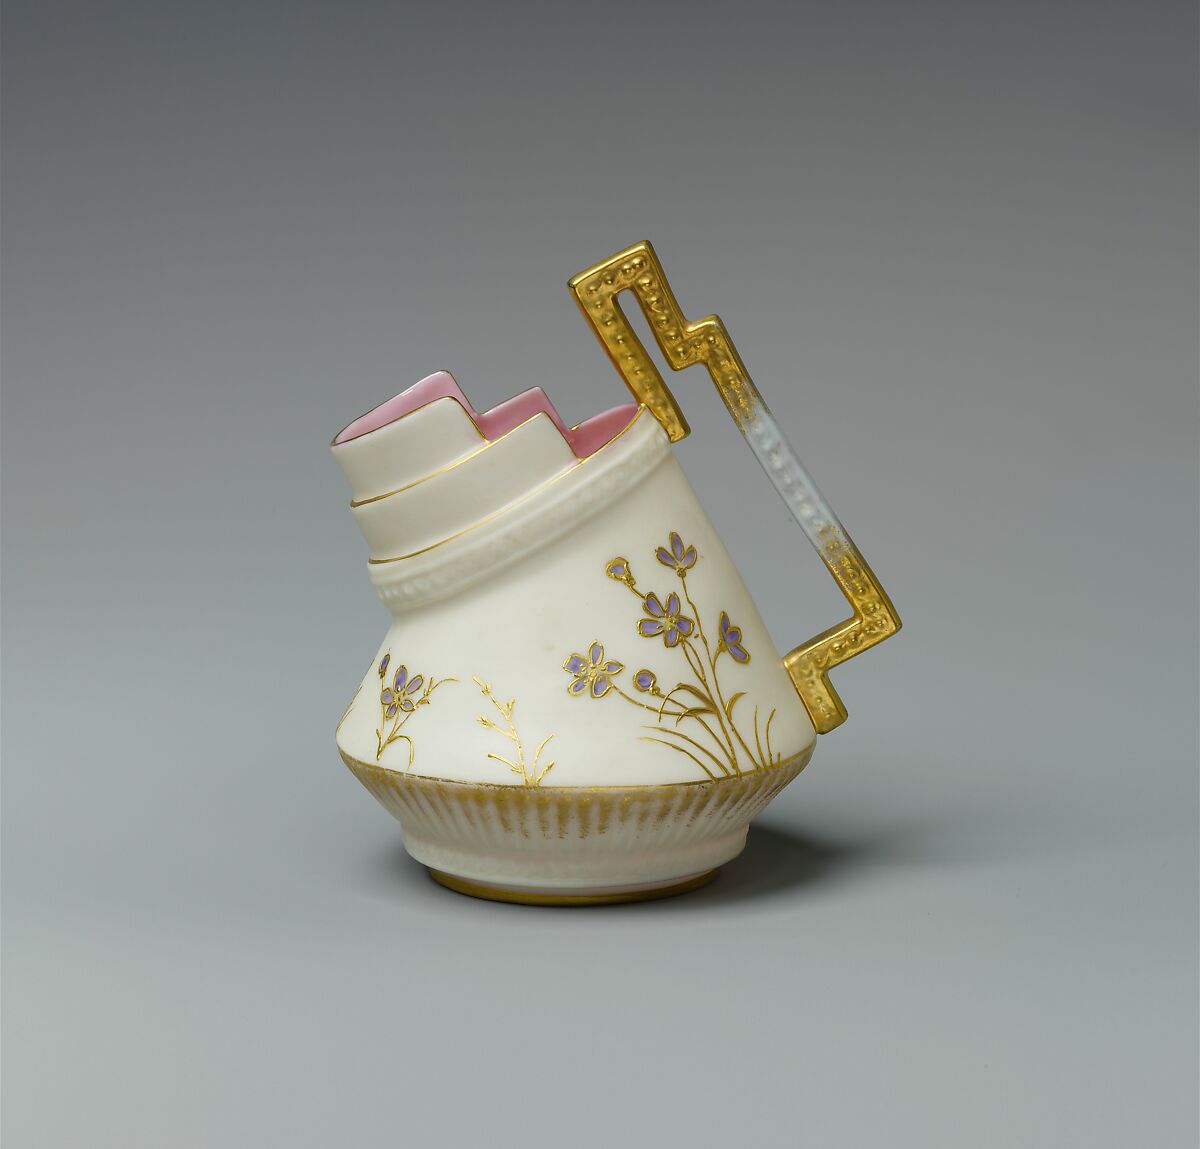 Pitcher, Ceramic Art Company, Trenton, New Jersey (American, 1889–1896), Belleek porcelain, with overglaze enamel decoration and gilding, American 